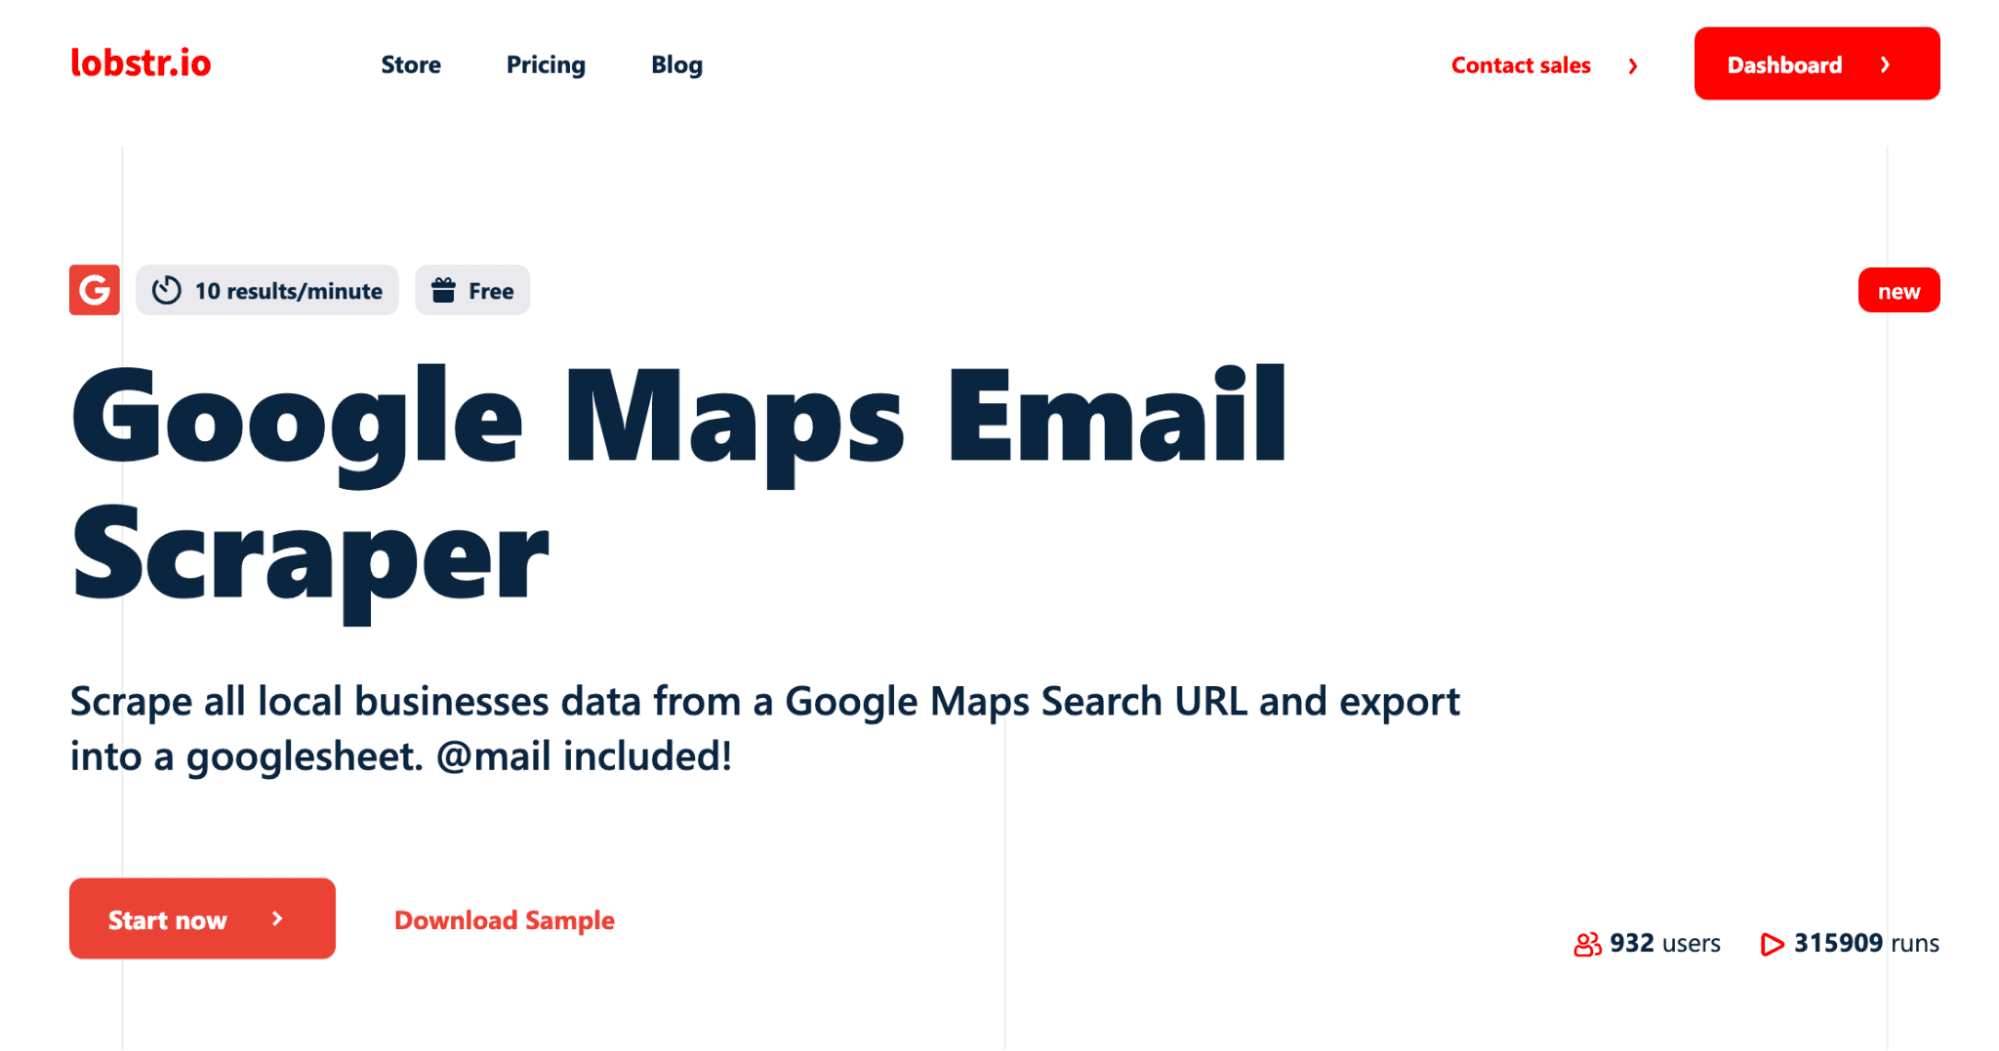 google maps email scraper product screenshot - image11.png